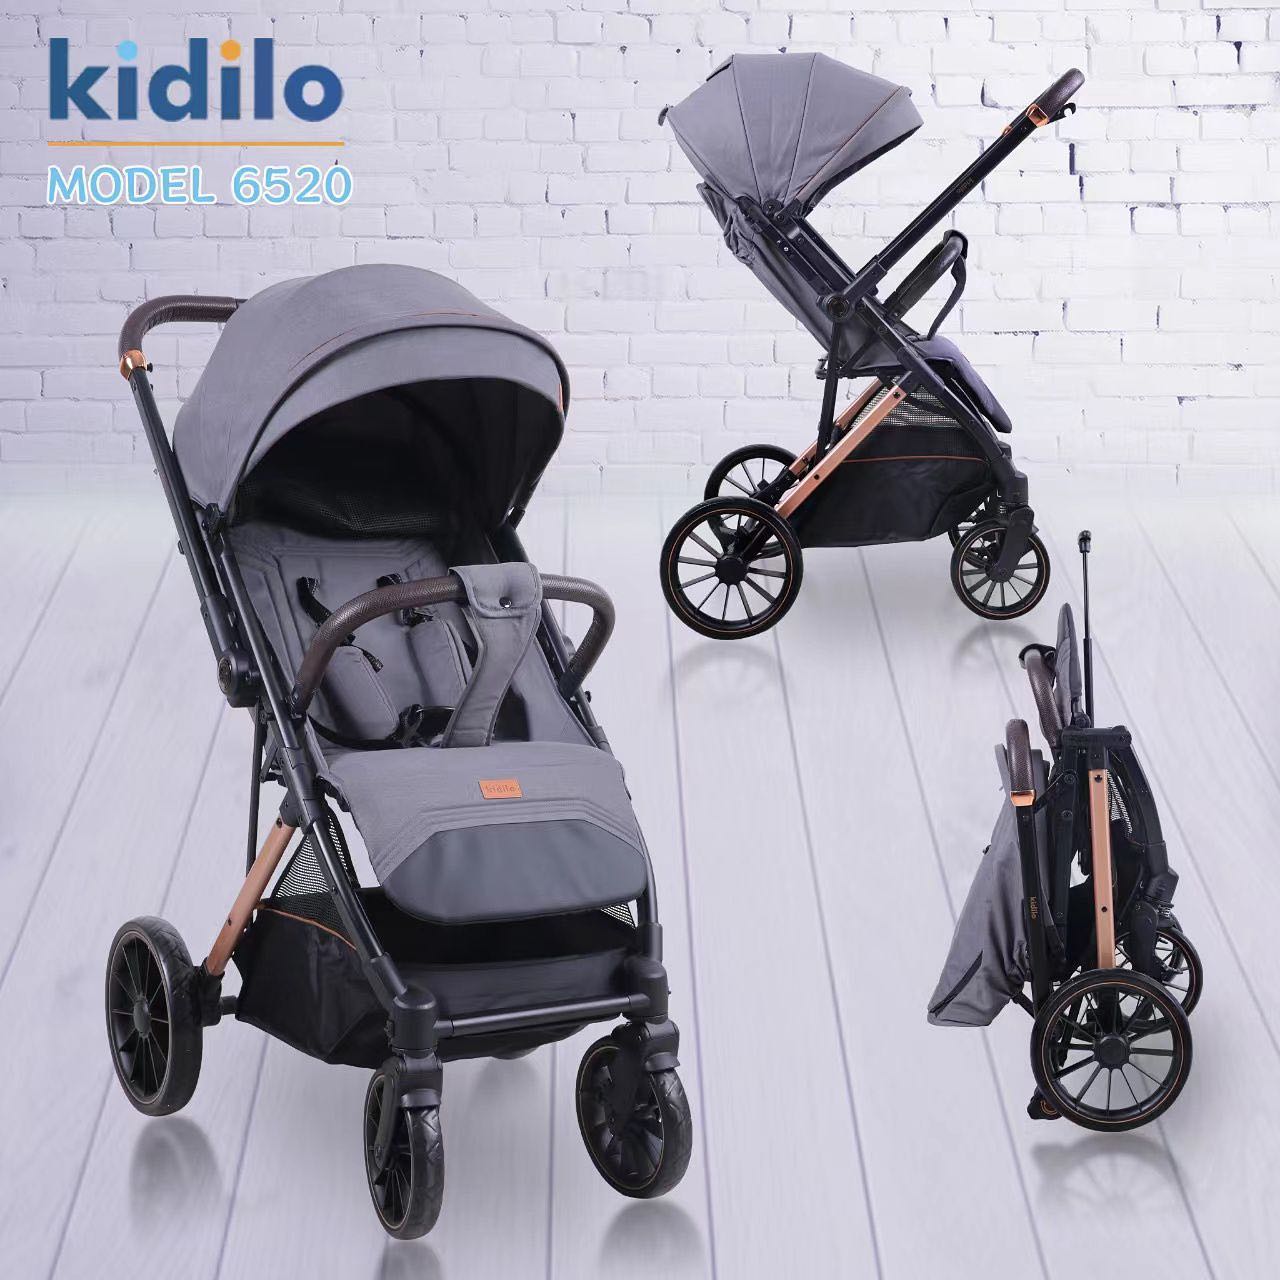 Kidilo Baby Stroller 6520